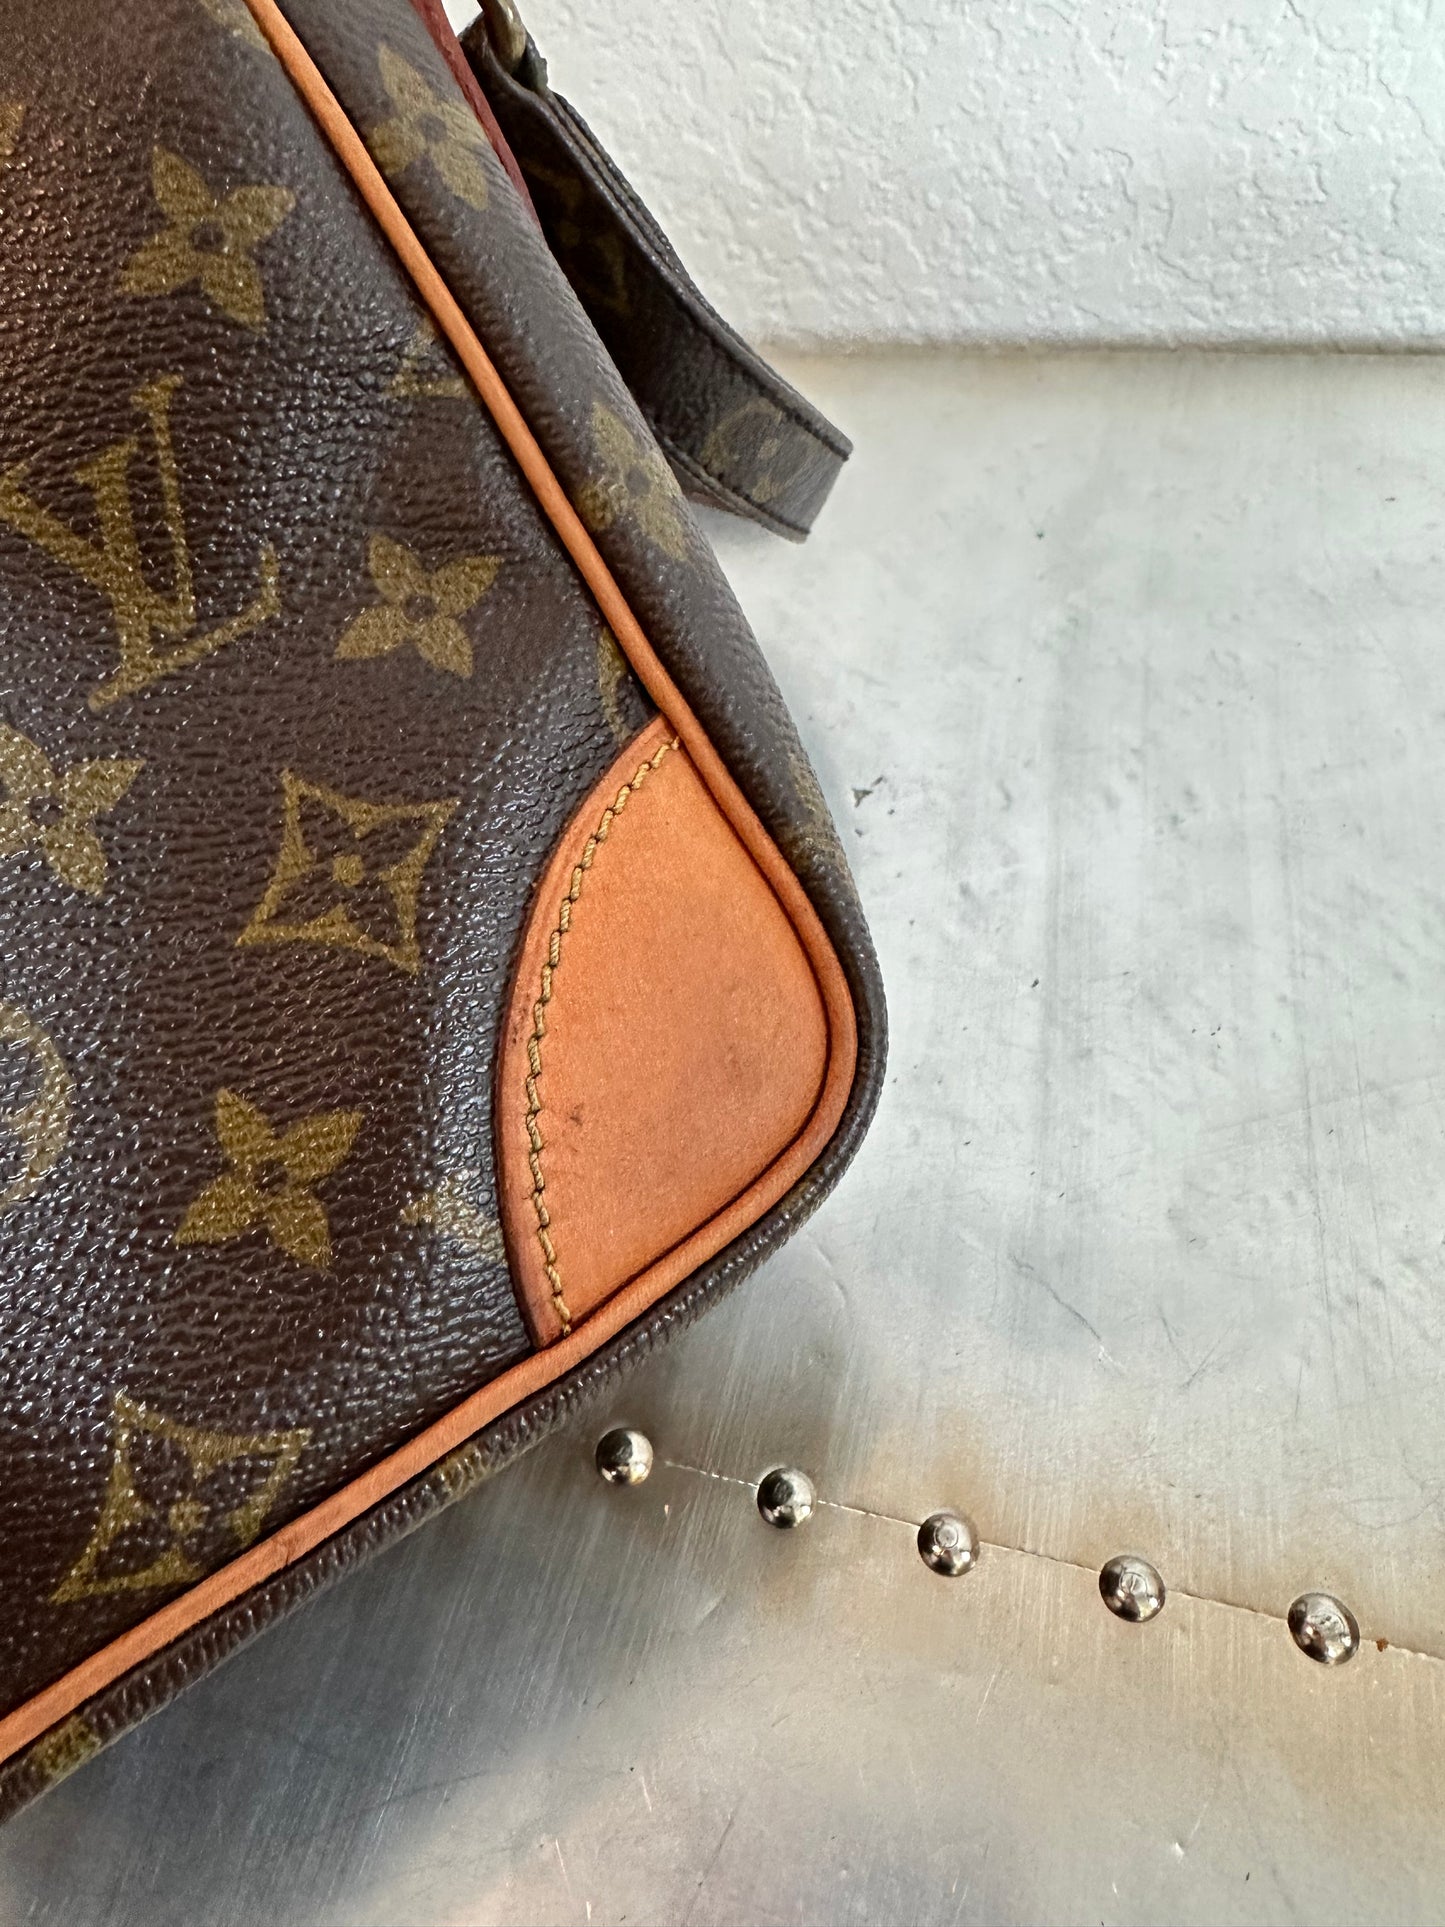 Pre-owned Authentic Louis Vuitton Amazon Monogram Crossbody Bag